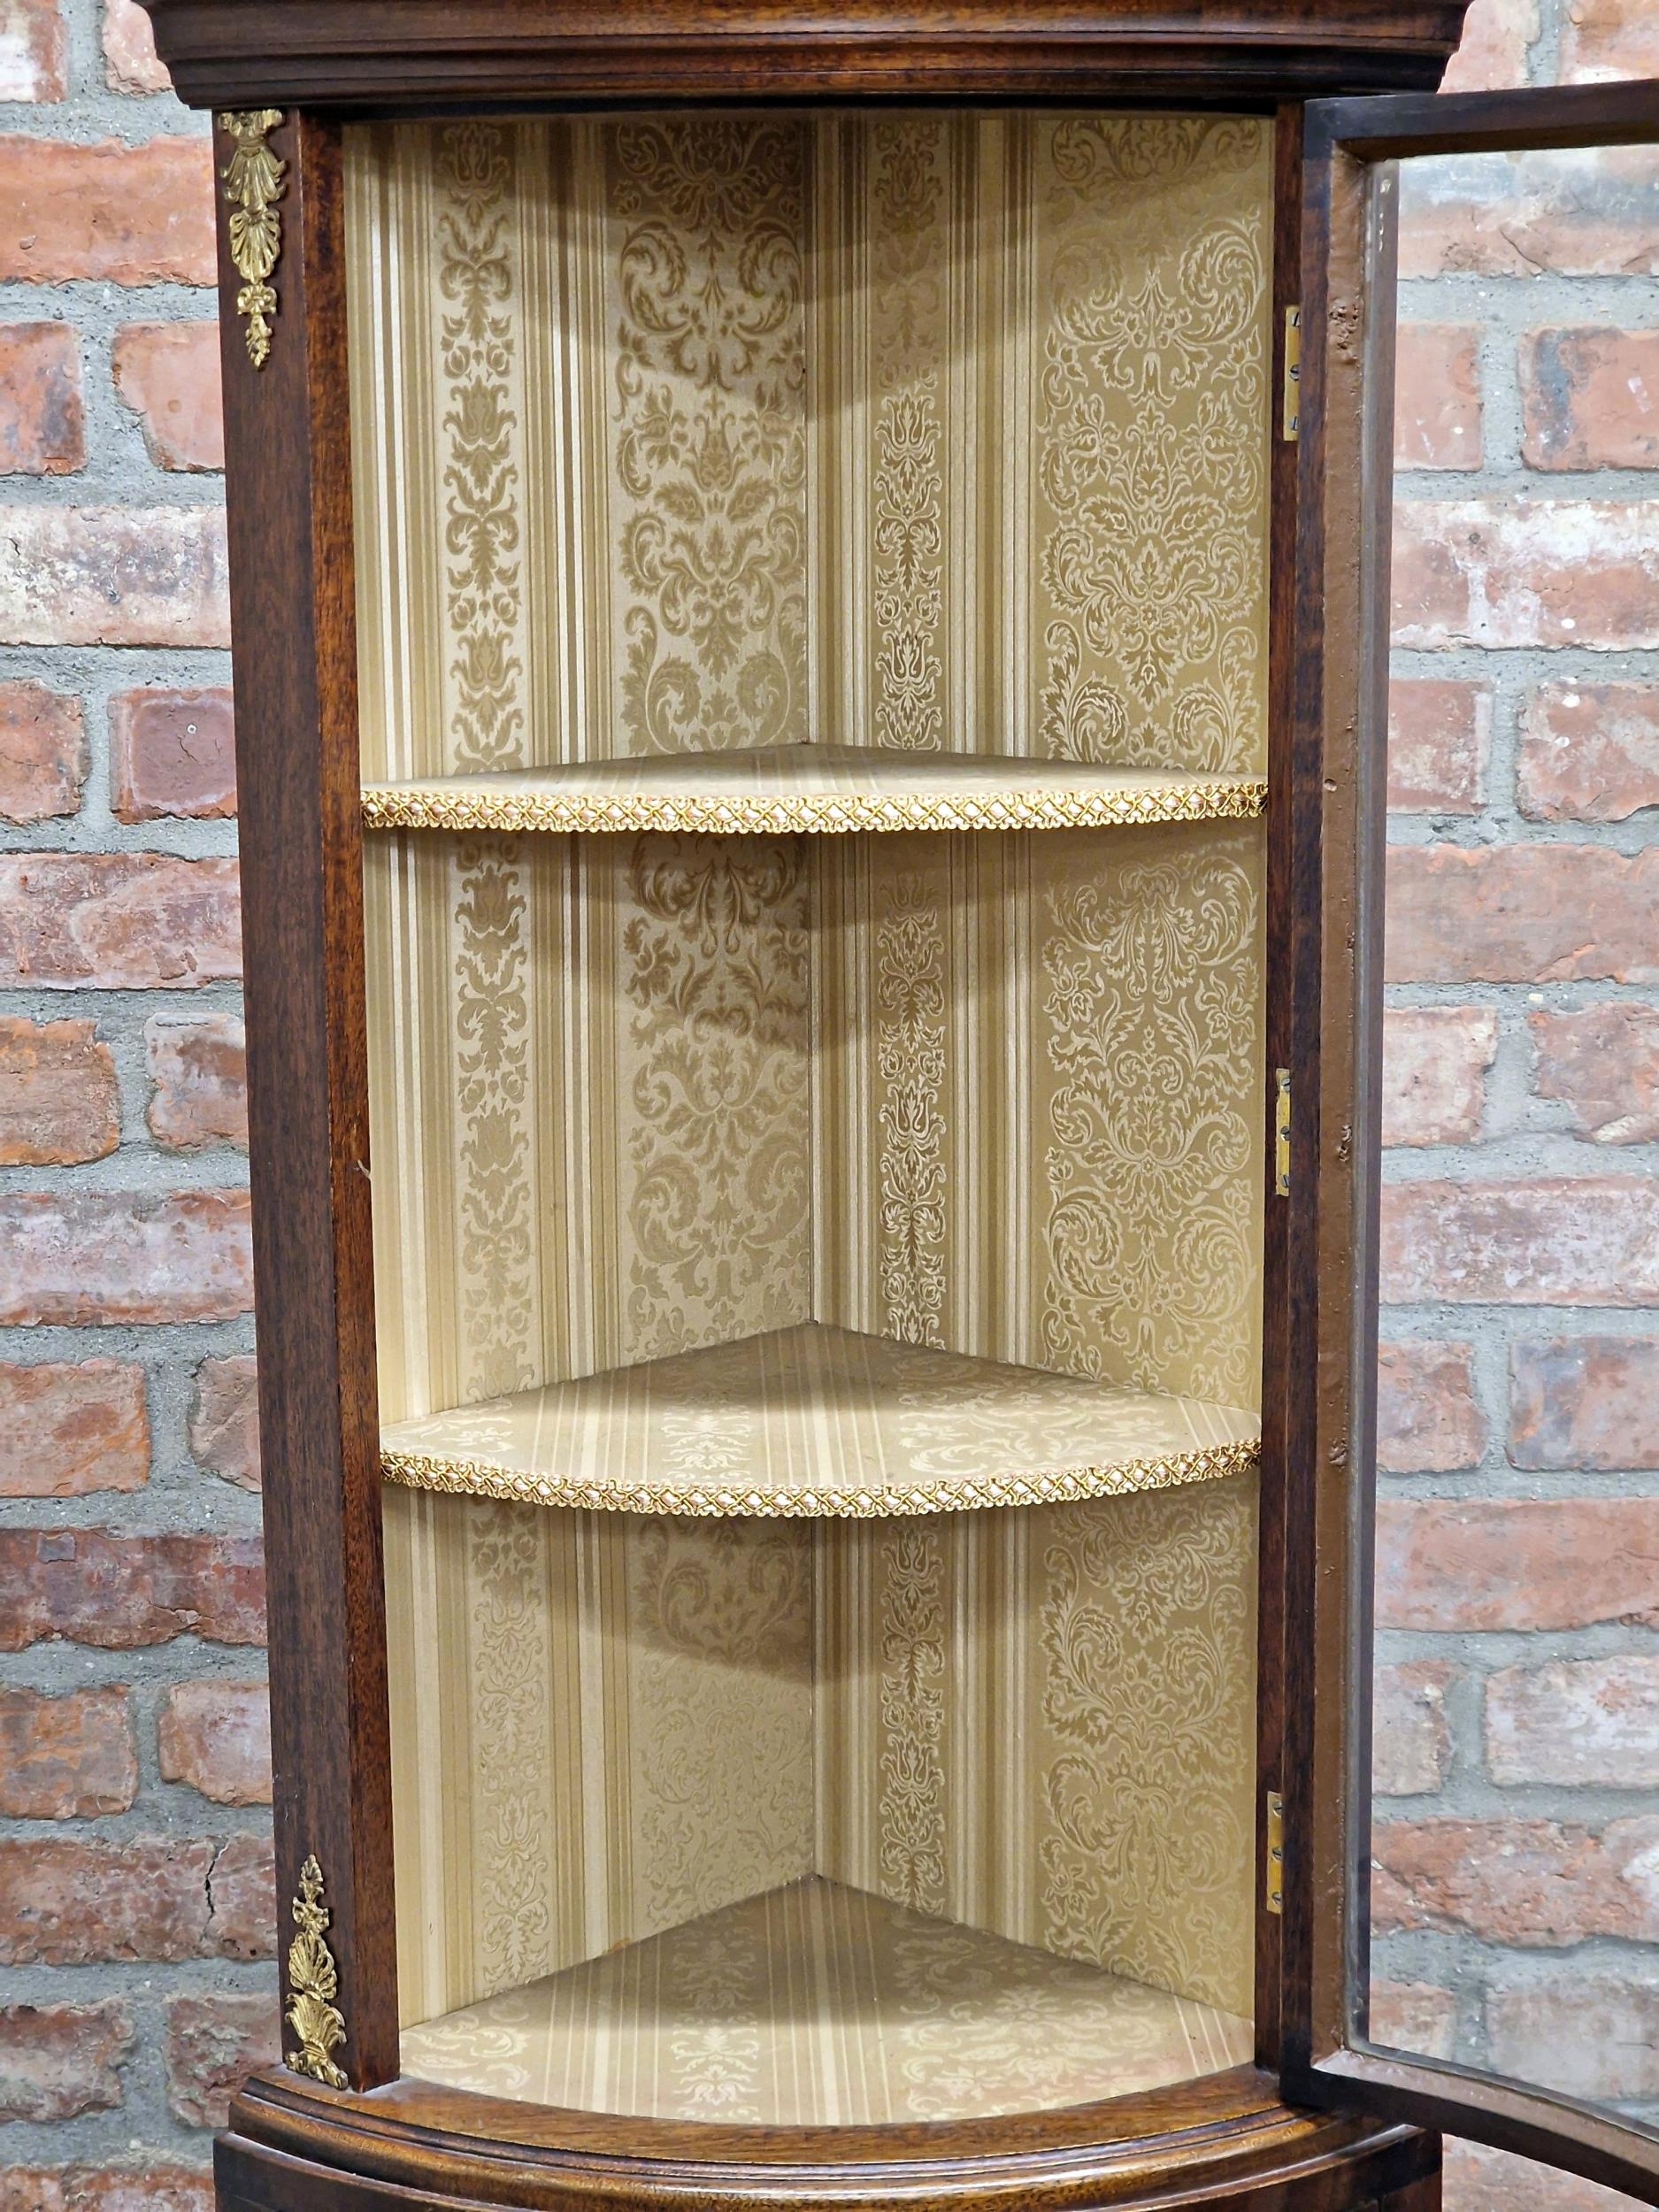 Mahogany bow front corner display cabinet, H 172cm - Image 2 of 2